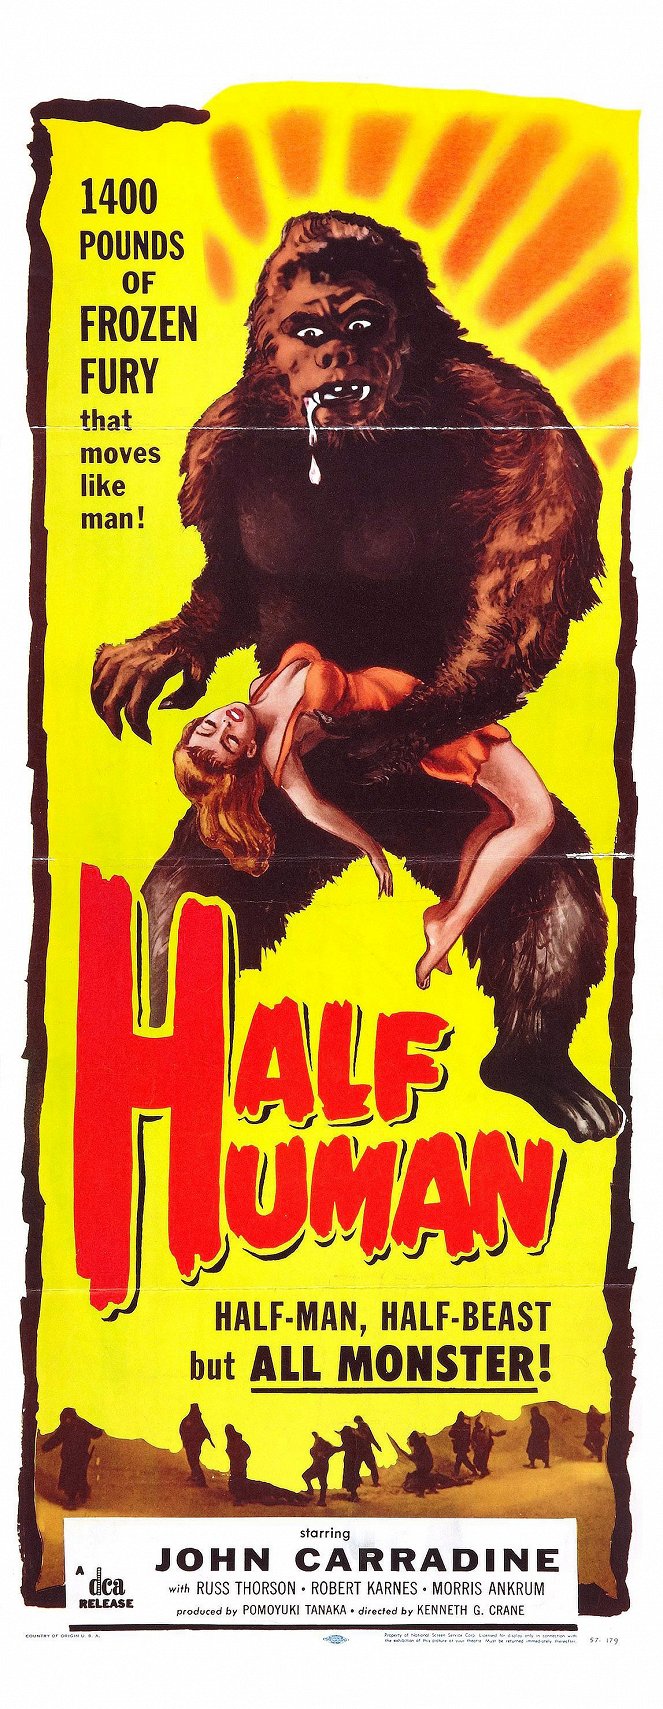 Half Human - Posters